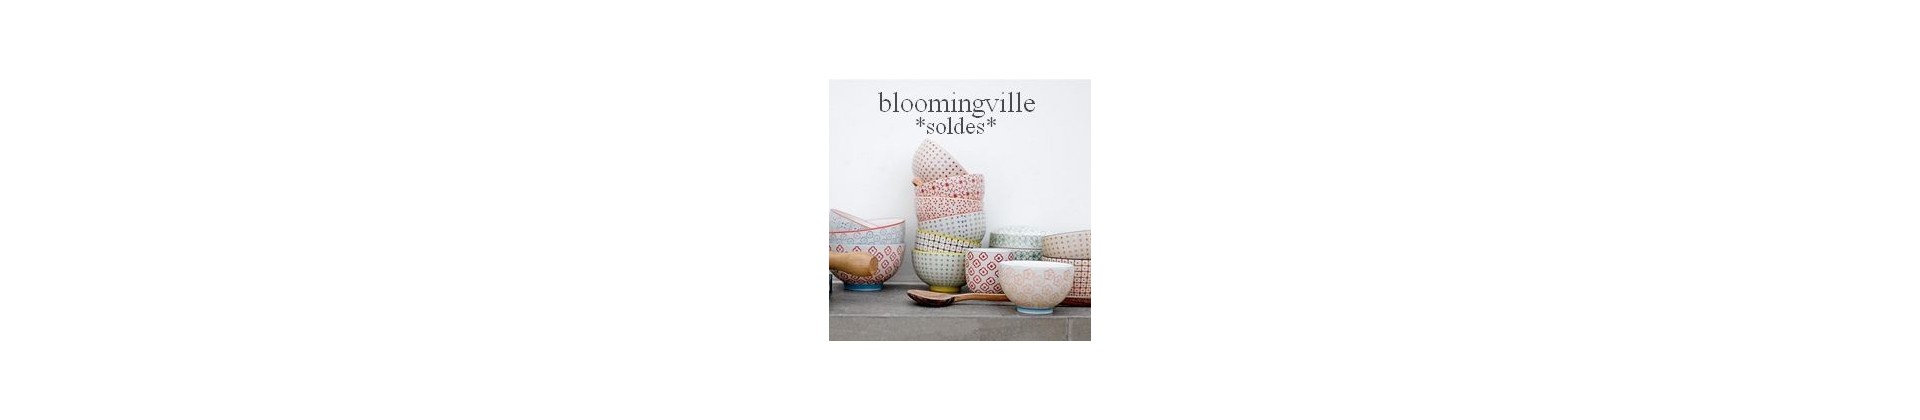 soldes bloomingville -  vaisselle scandinave, tasses, bols, pots, saladiers